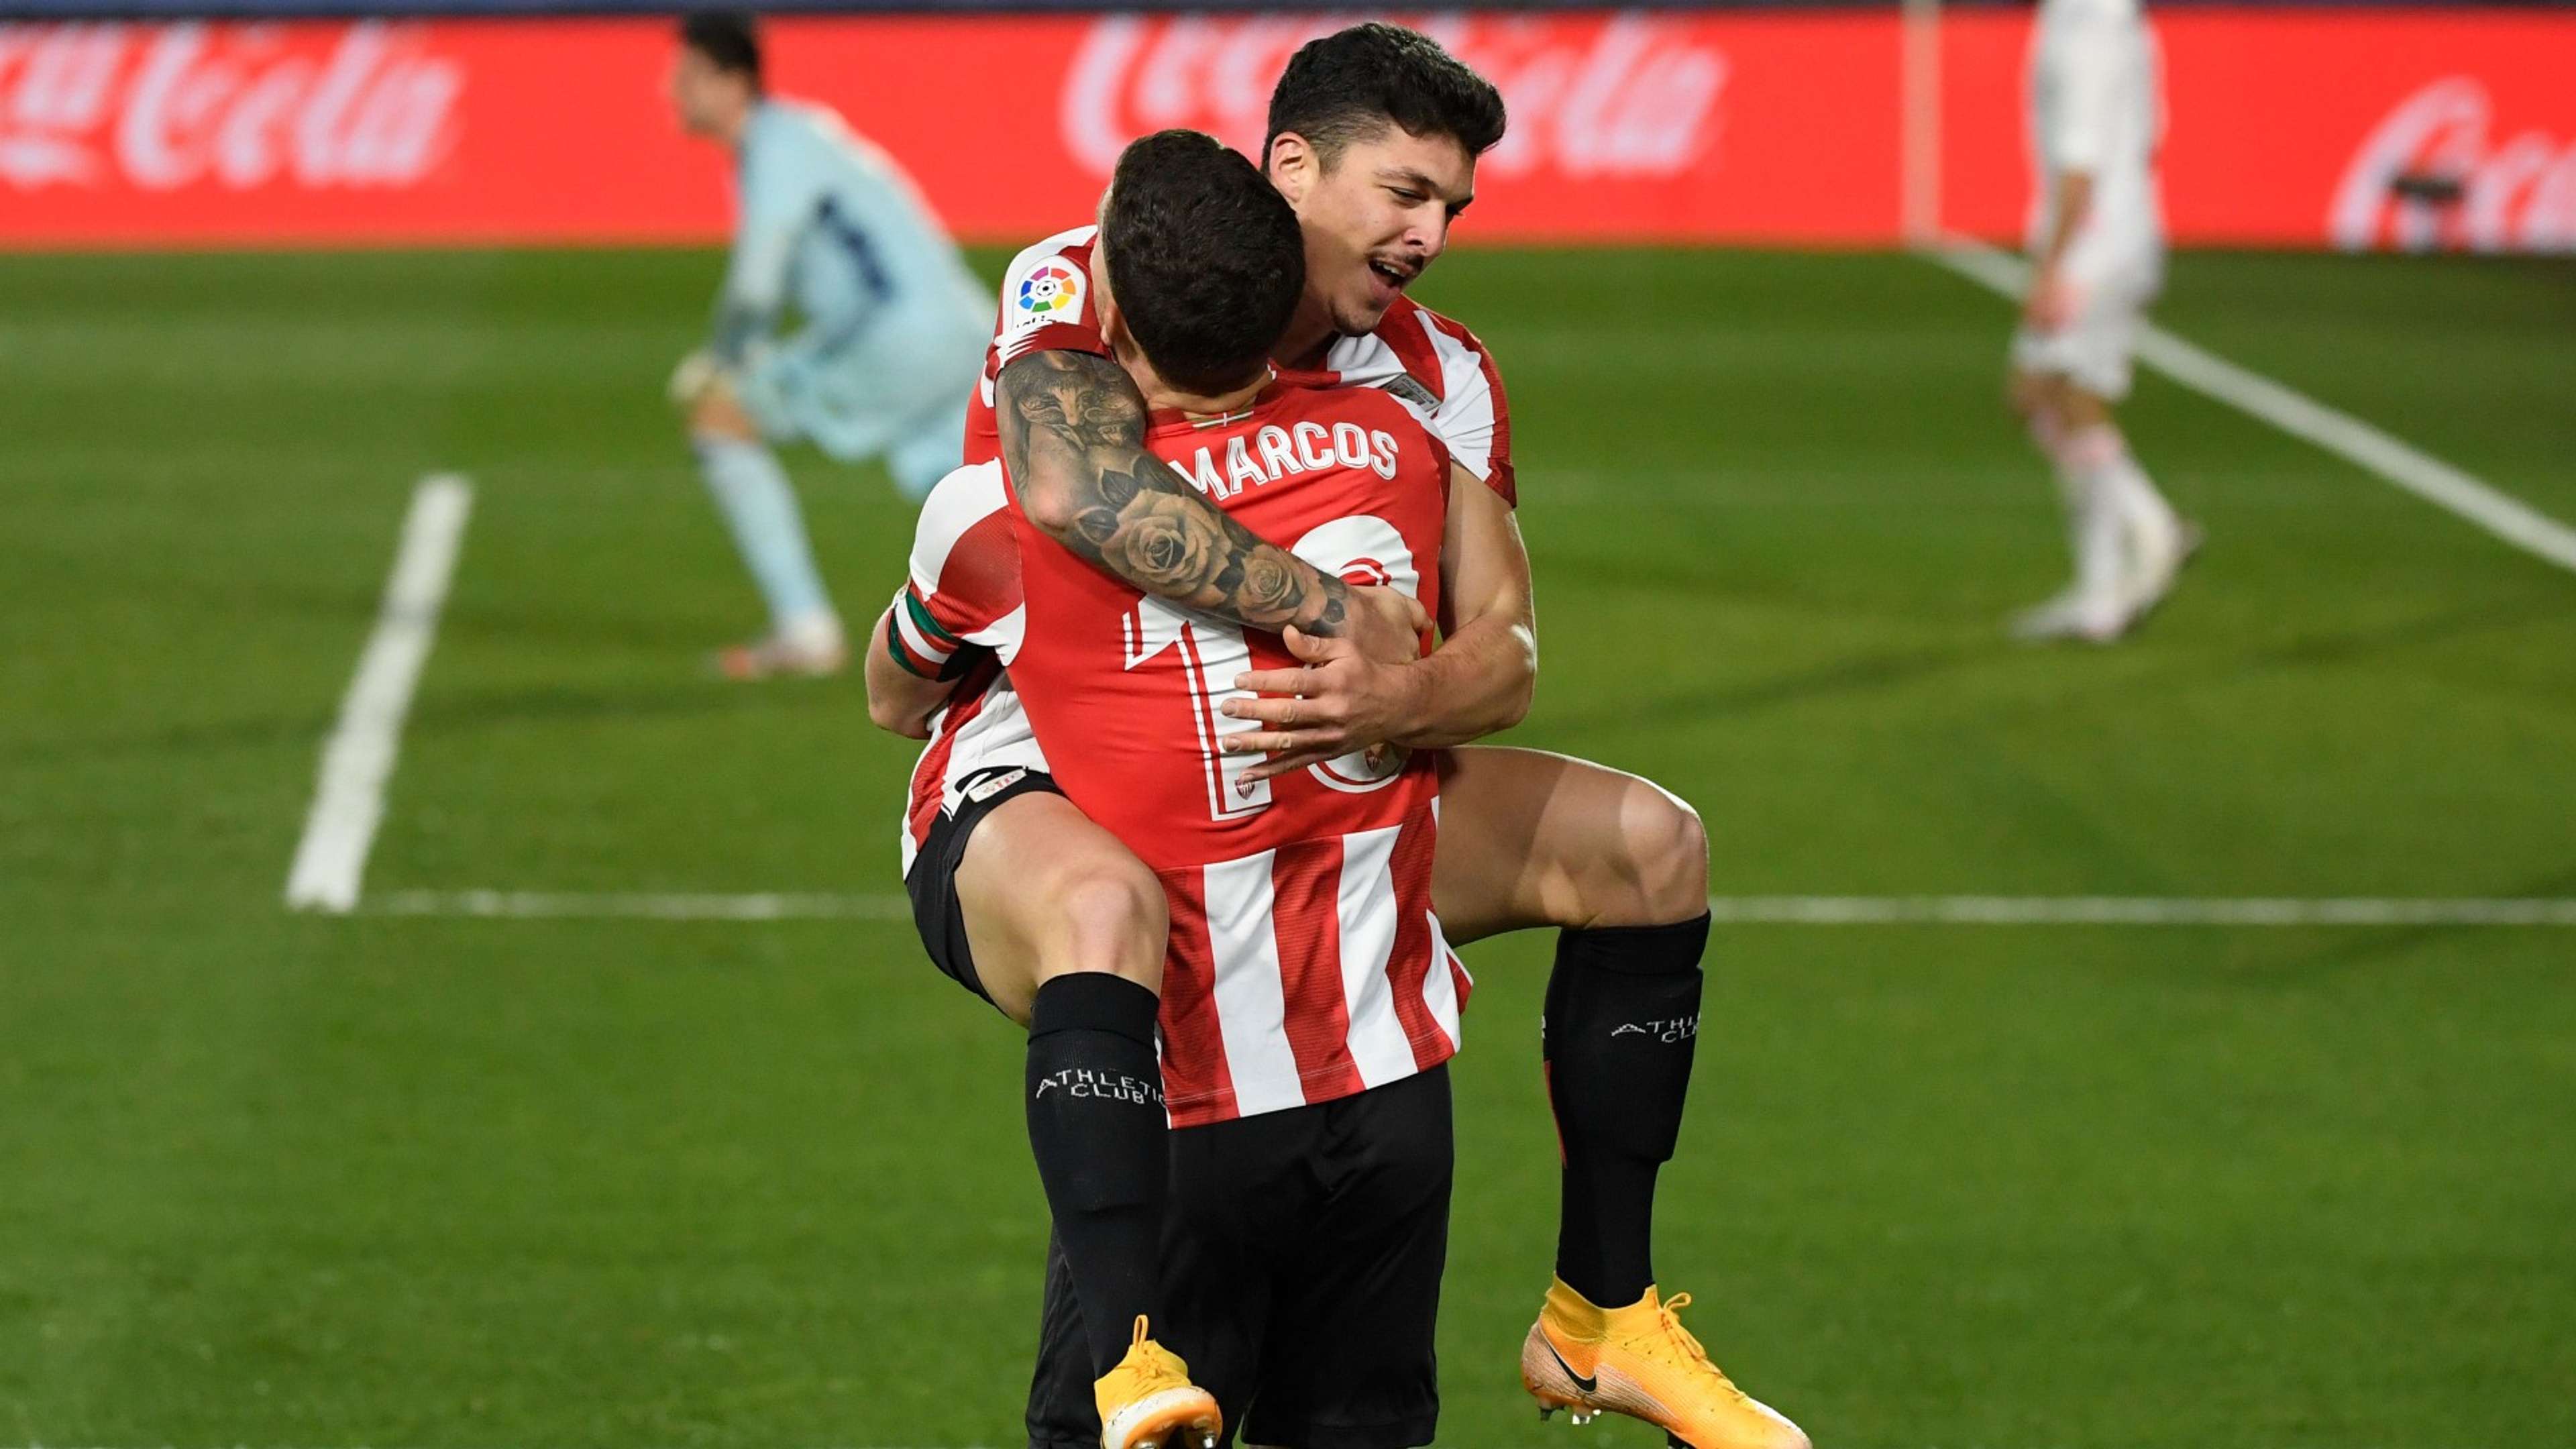 Capa Athletic Bilbao 2020